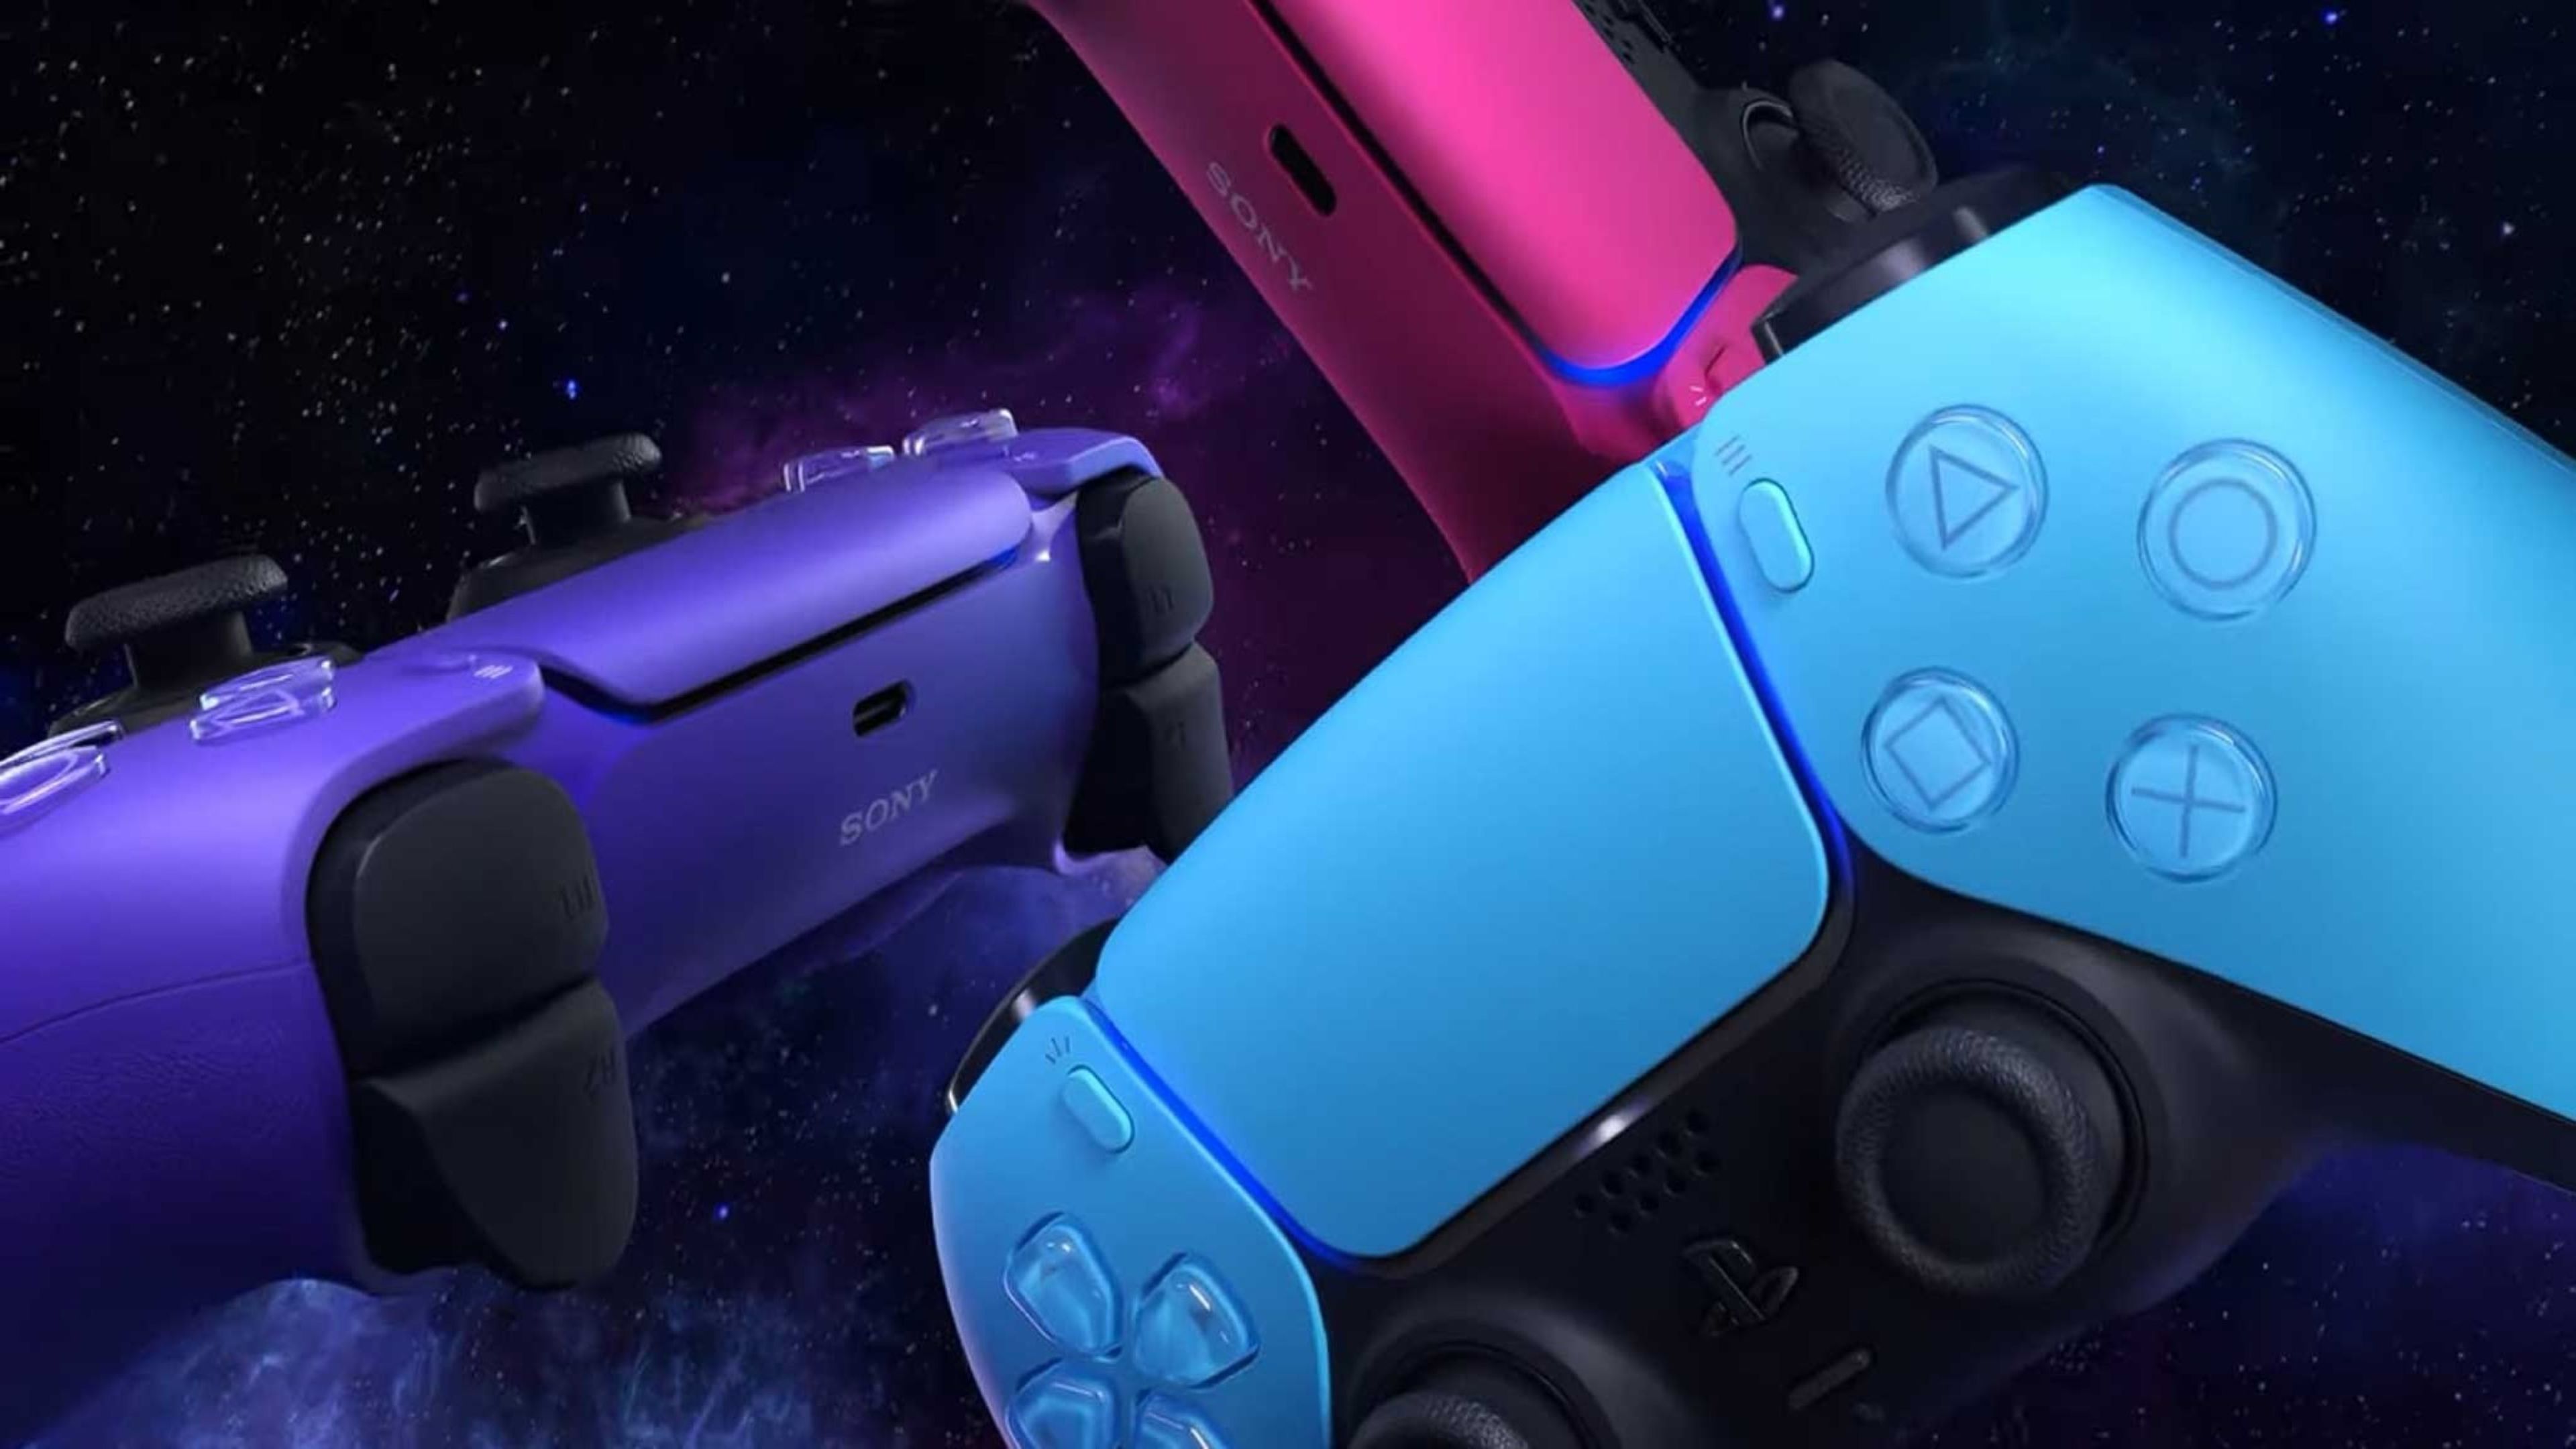 Comprar Sony mando dualsense ps5 galactic purple v2 